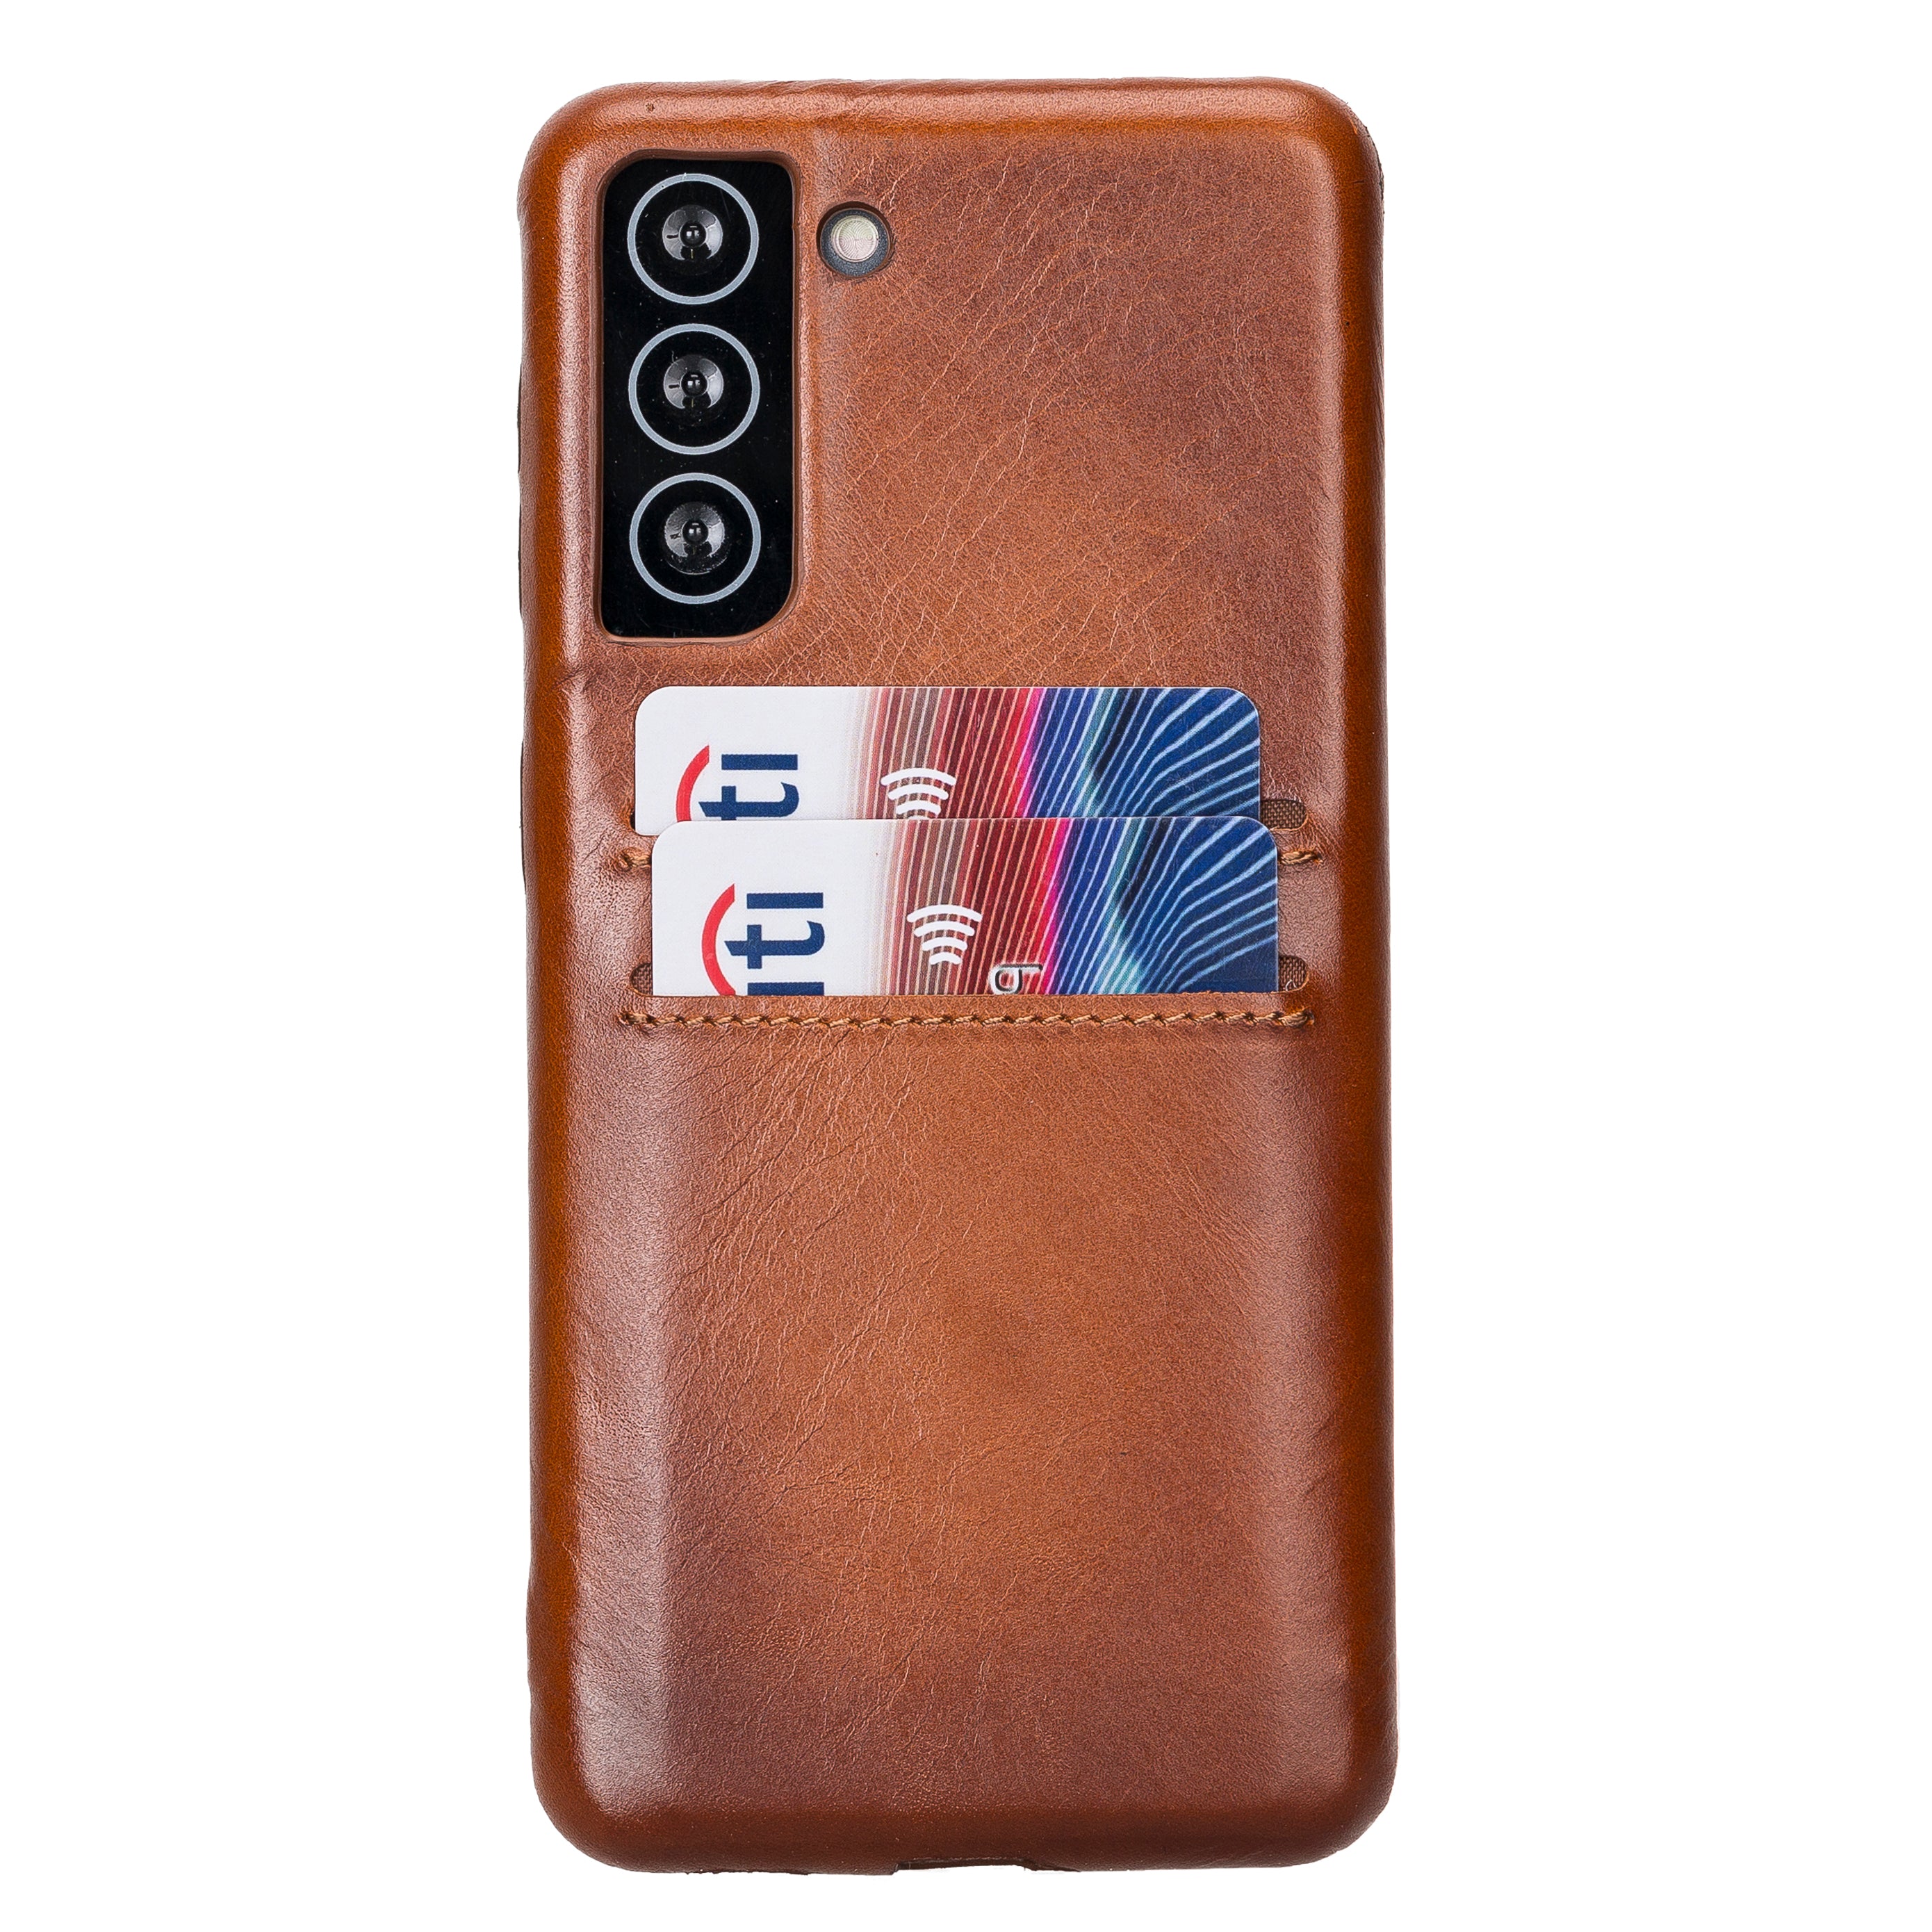 leef ermee haar Verandering Samsung Galaxy S21 Leather Snap-On Case with Card holder - Hardiston